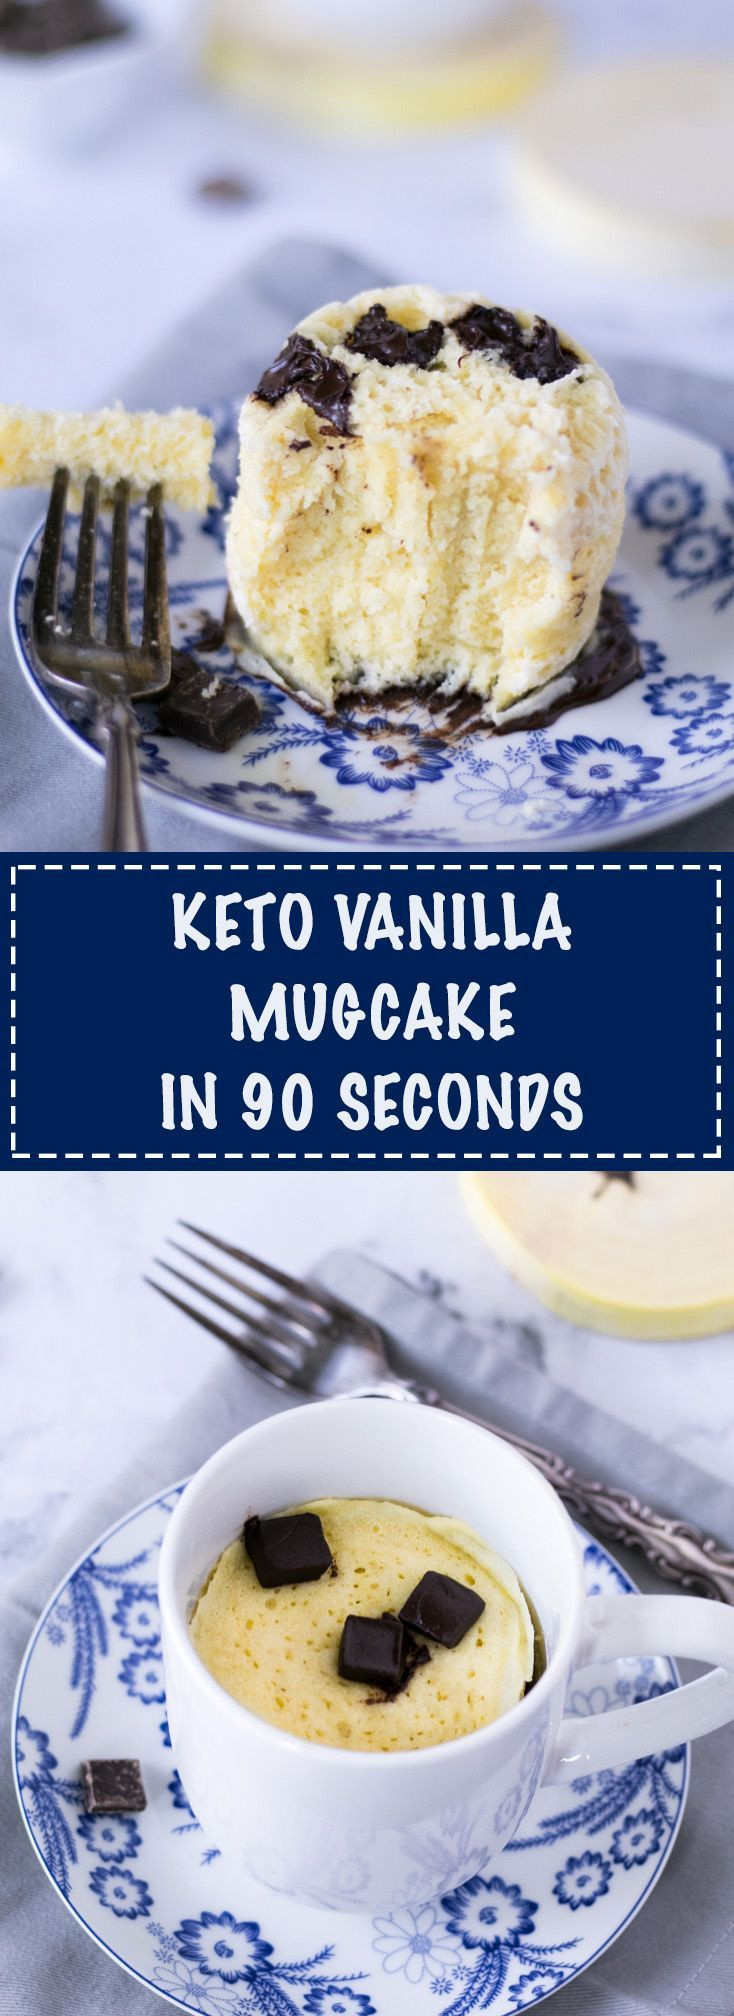 Keto Dessert In A Mug
 Interested in making a keto friendly 90 second mug cake